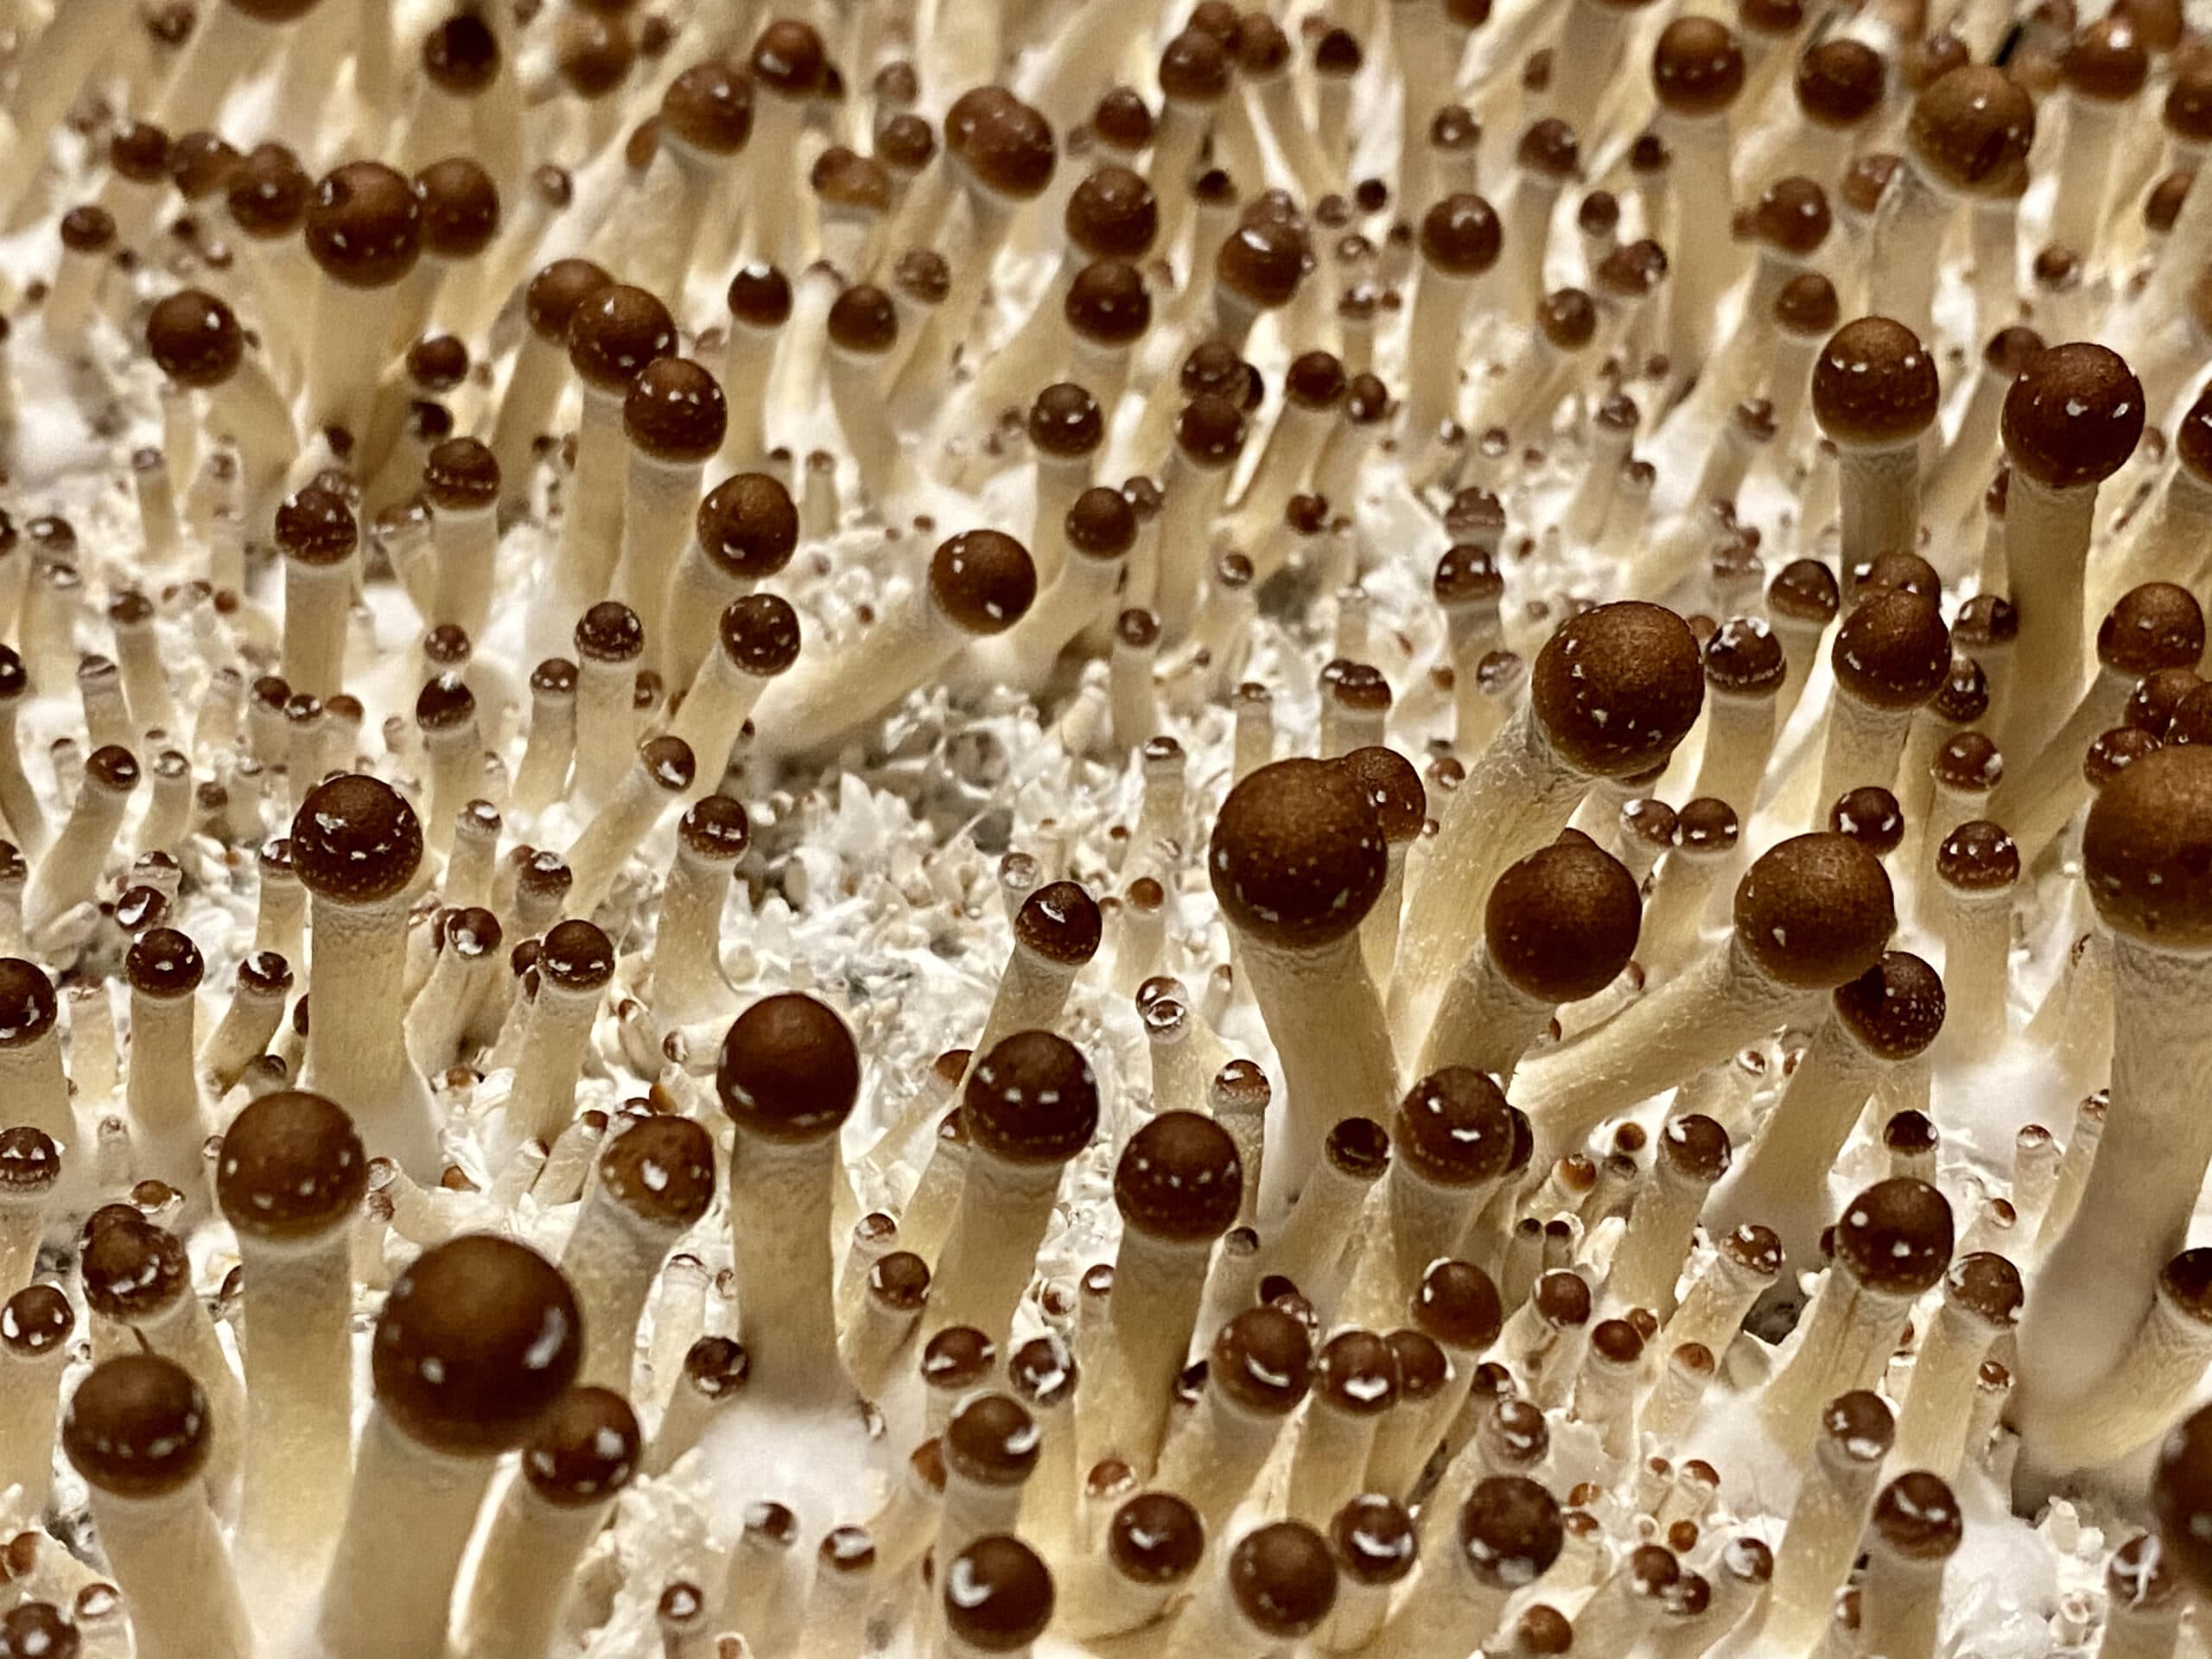 Tightly growing mushroom pins